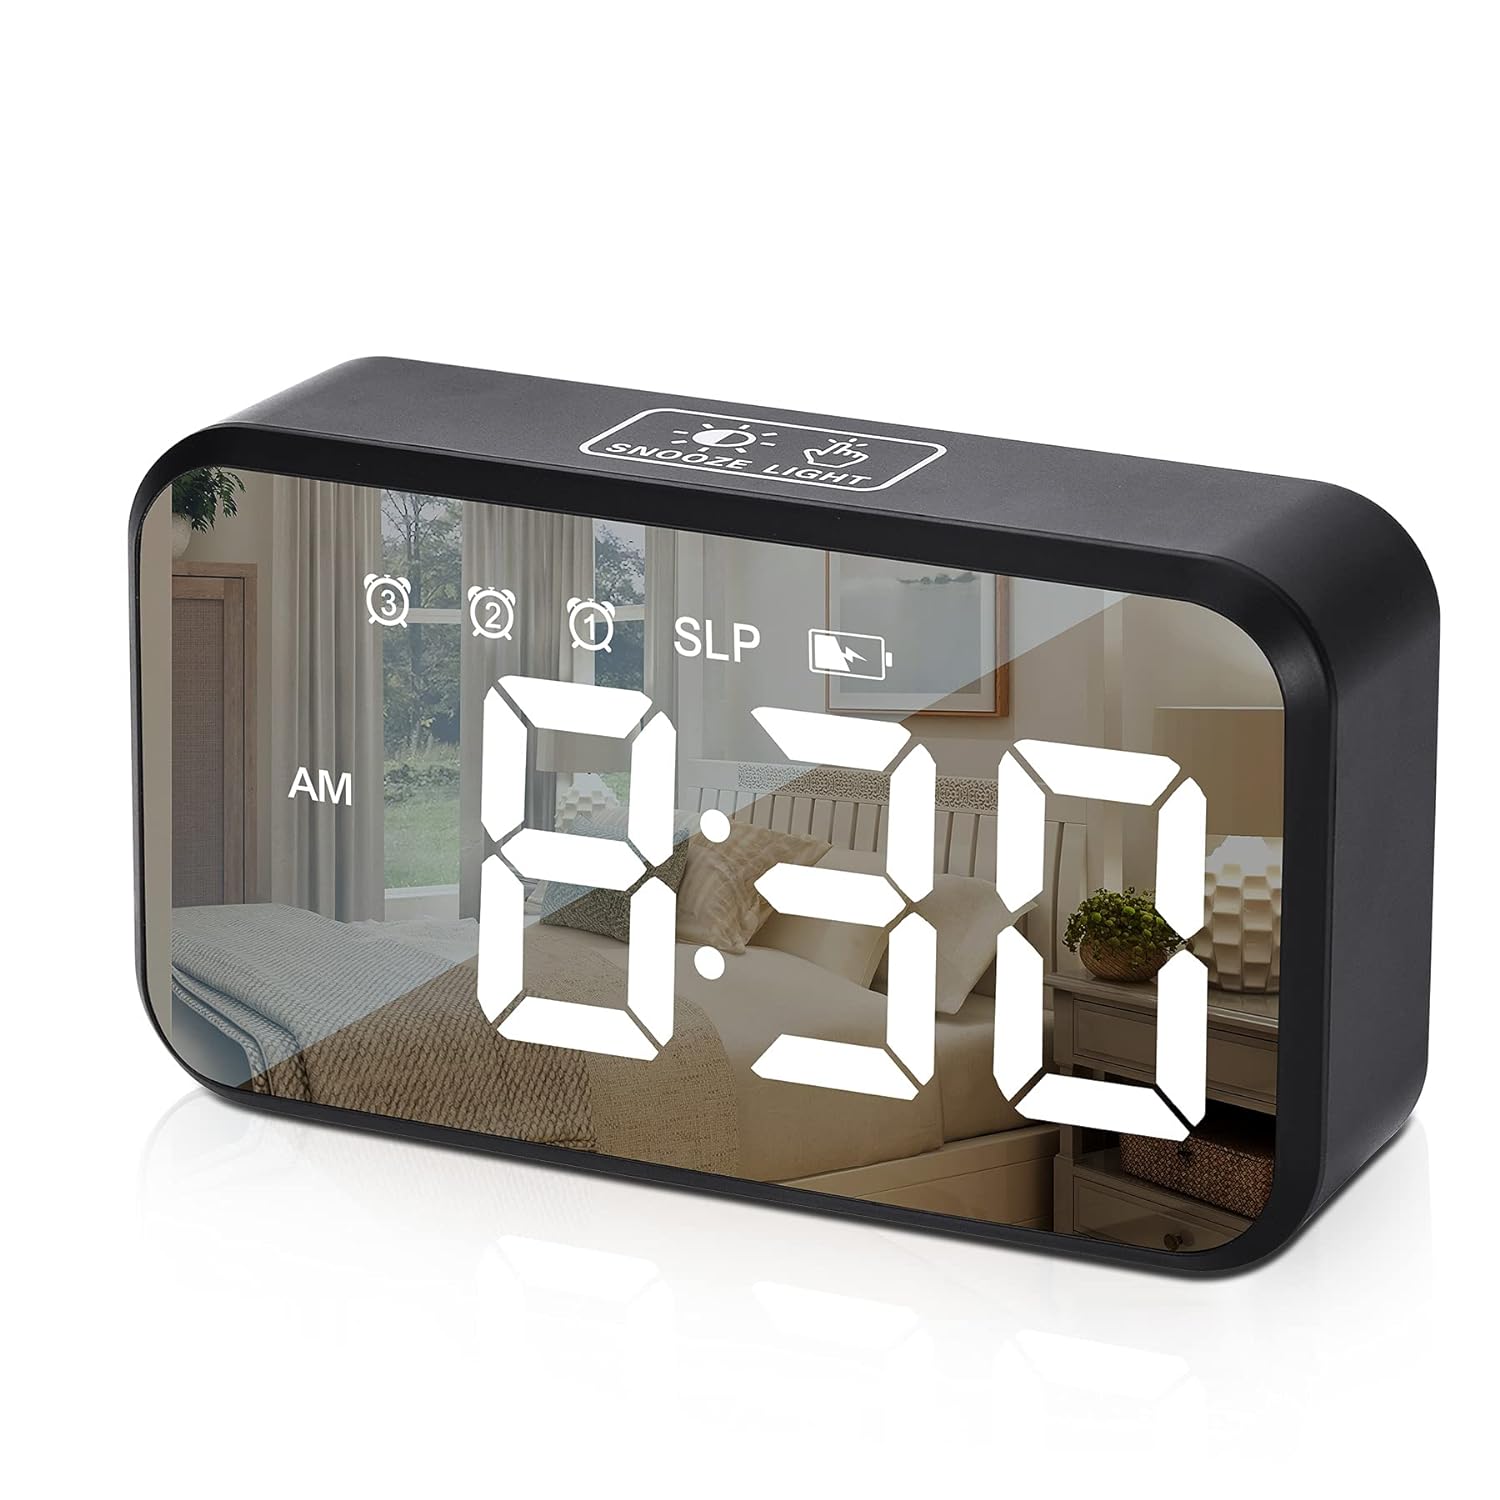 Amgico Digital Alarm Clock with Snooze